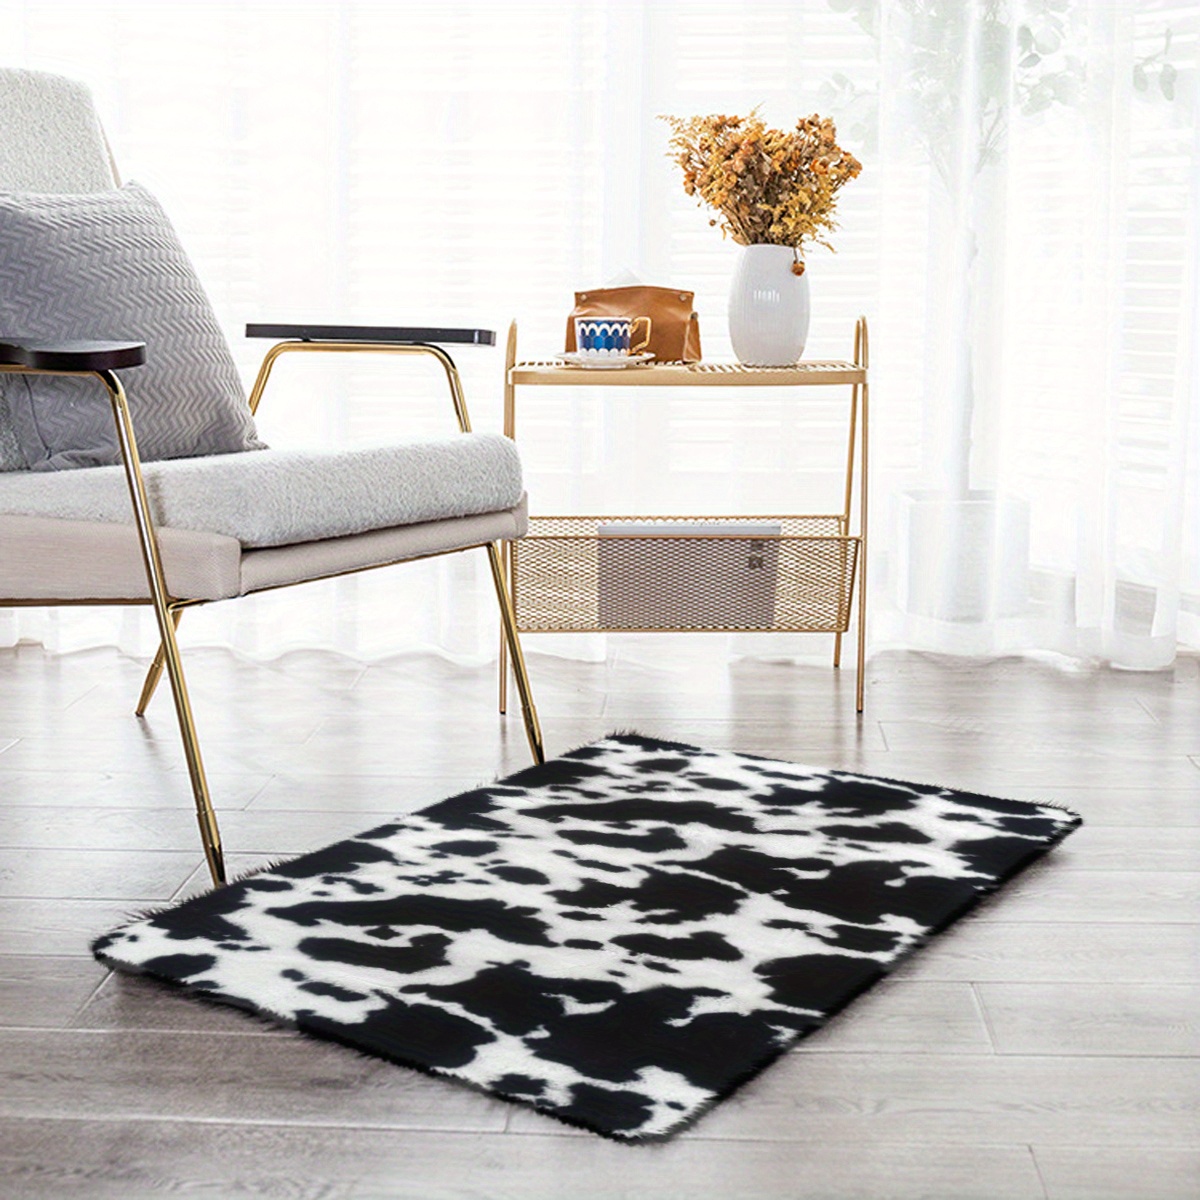 Cow Animal Print Carpet Chair Throw Rug Anti-slip Living Room Lounge Decor